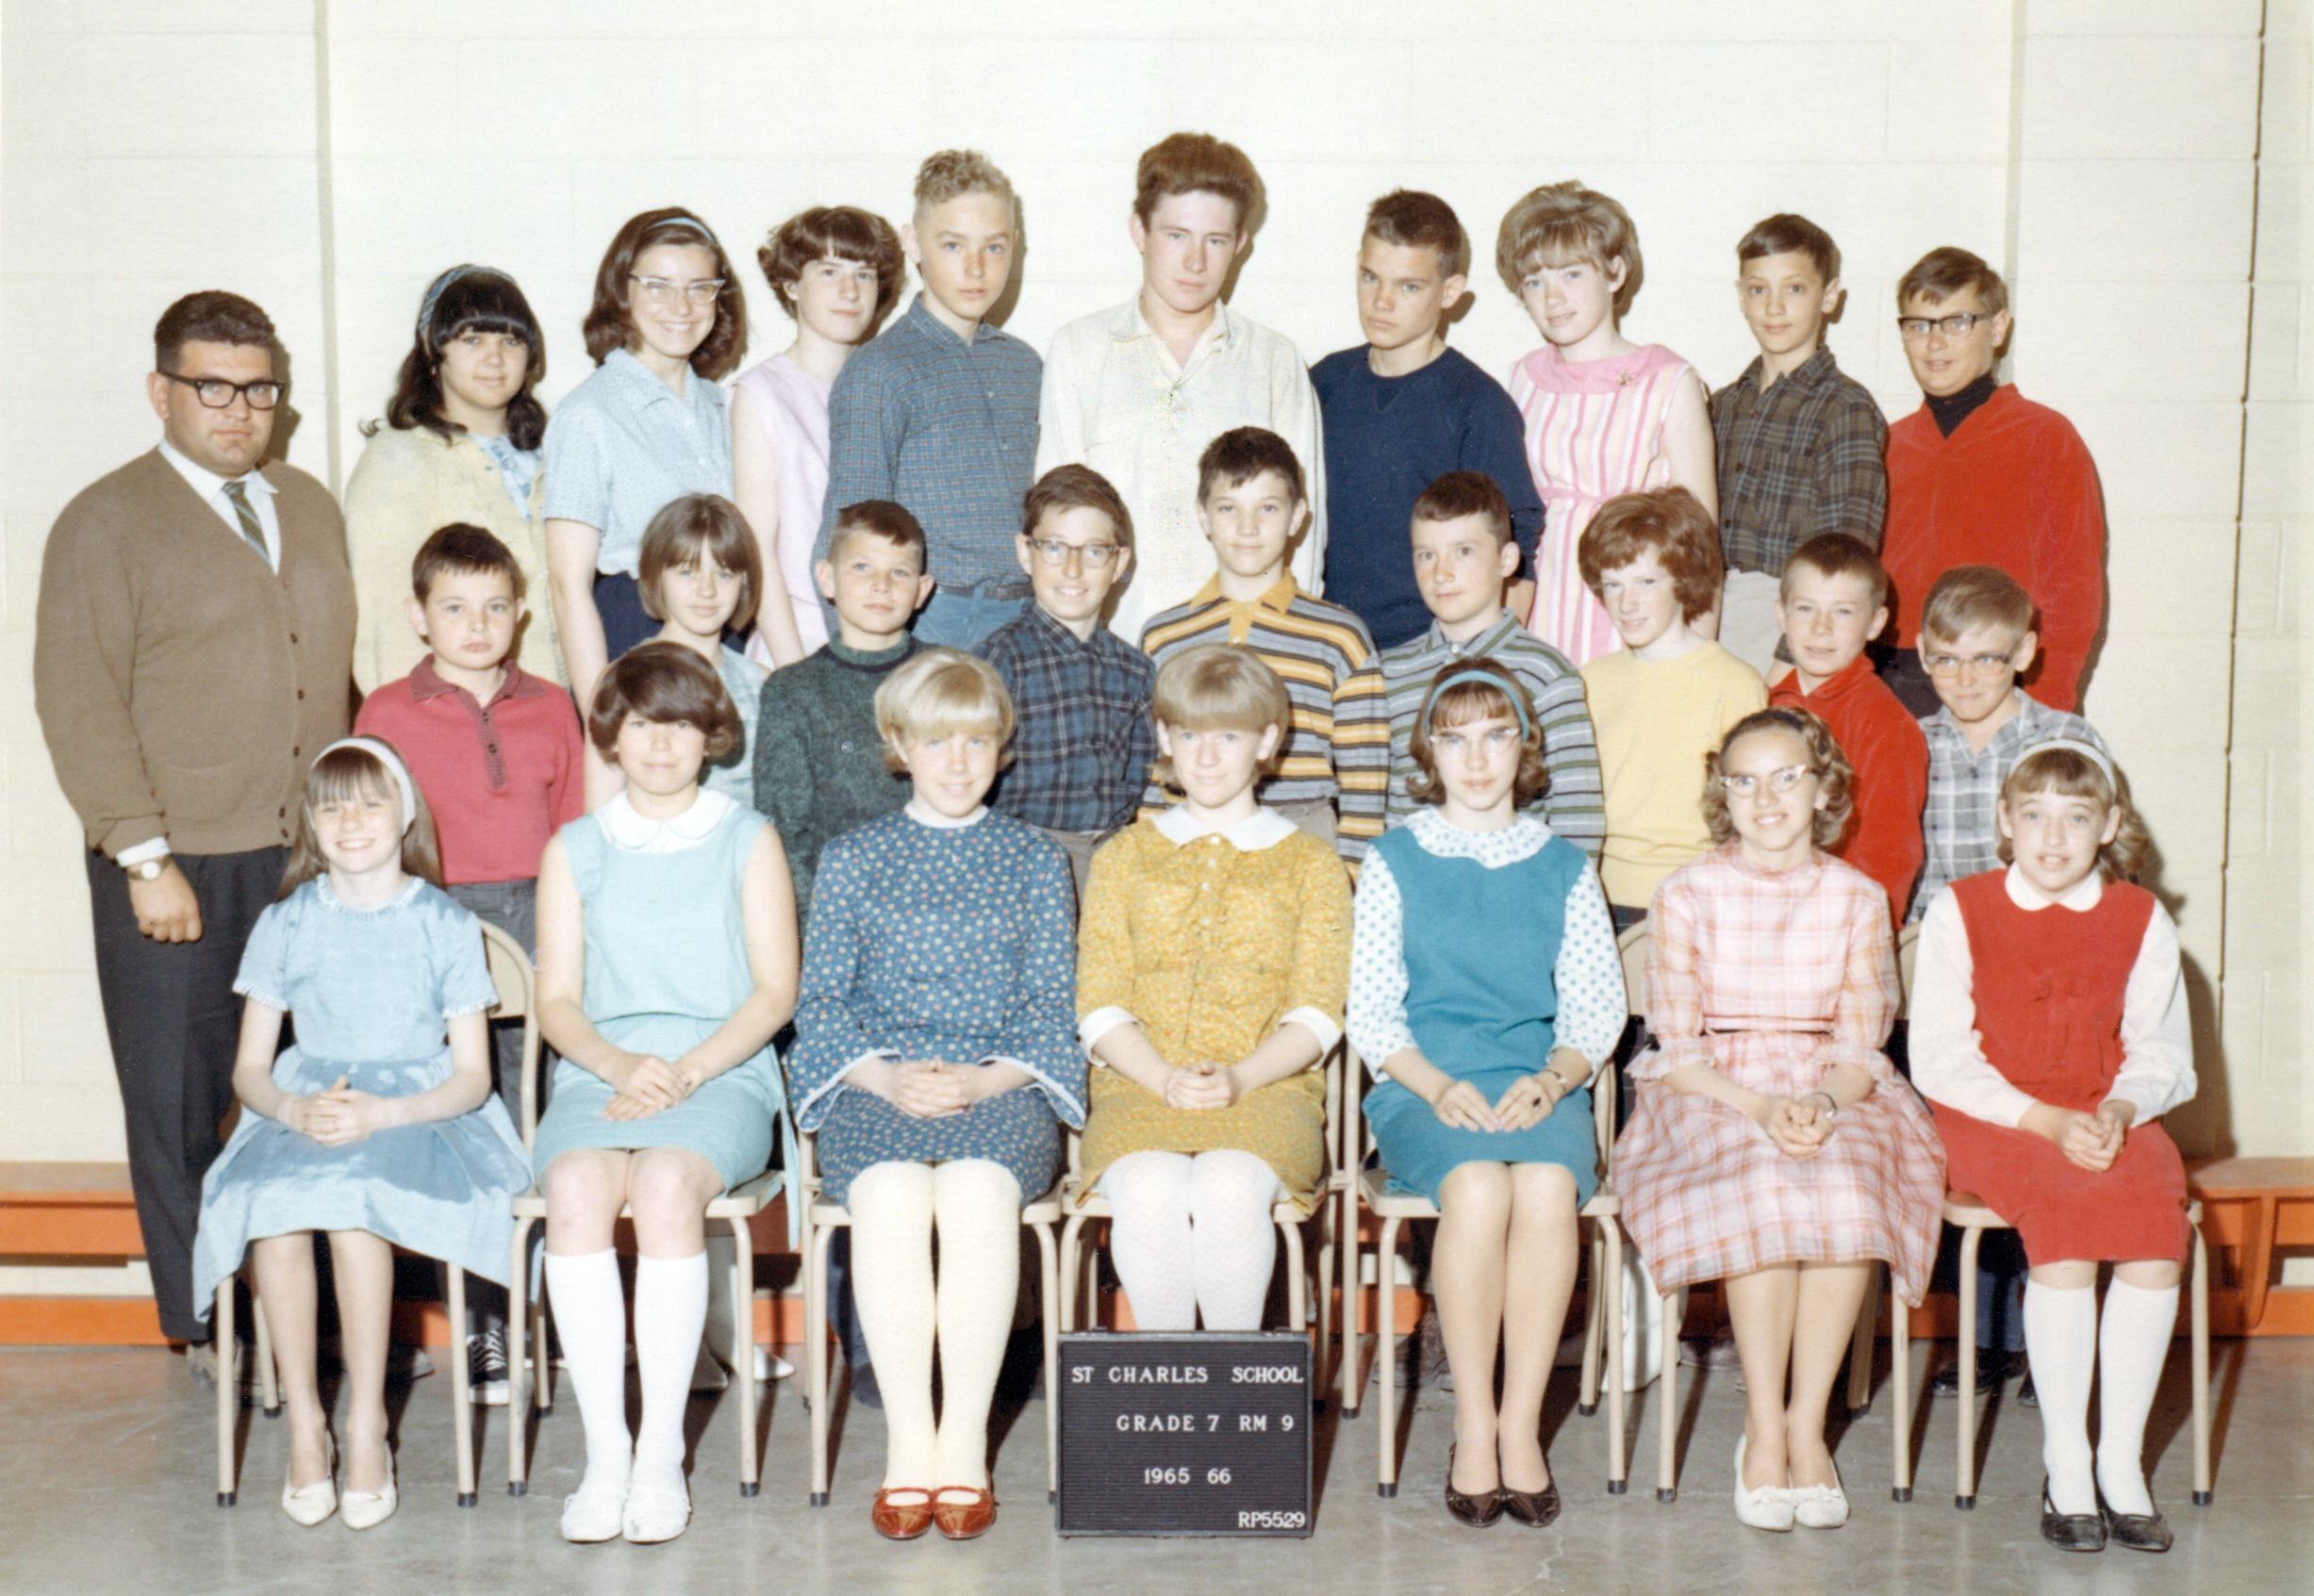 St. Charles School, Grade 7 1965-66 